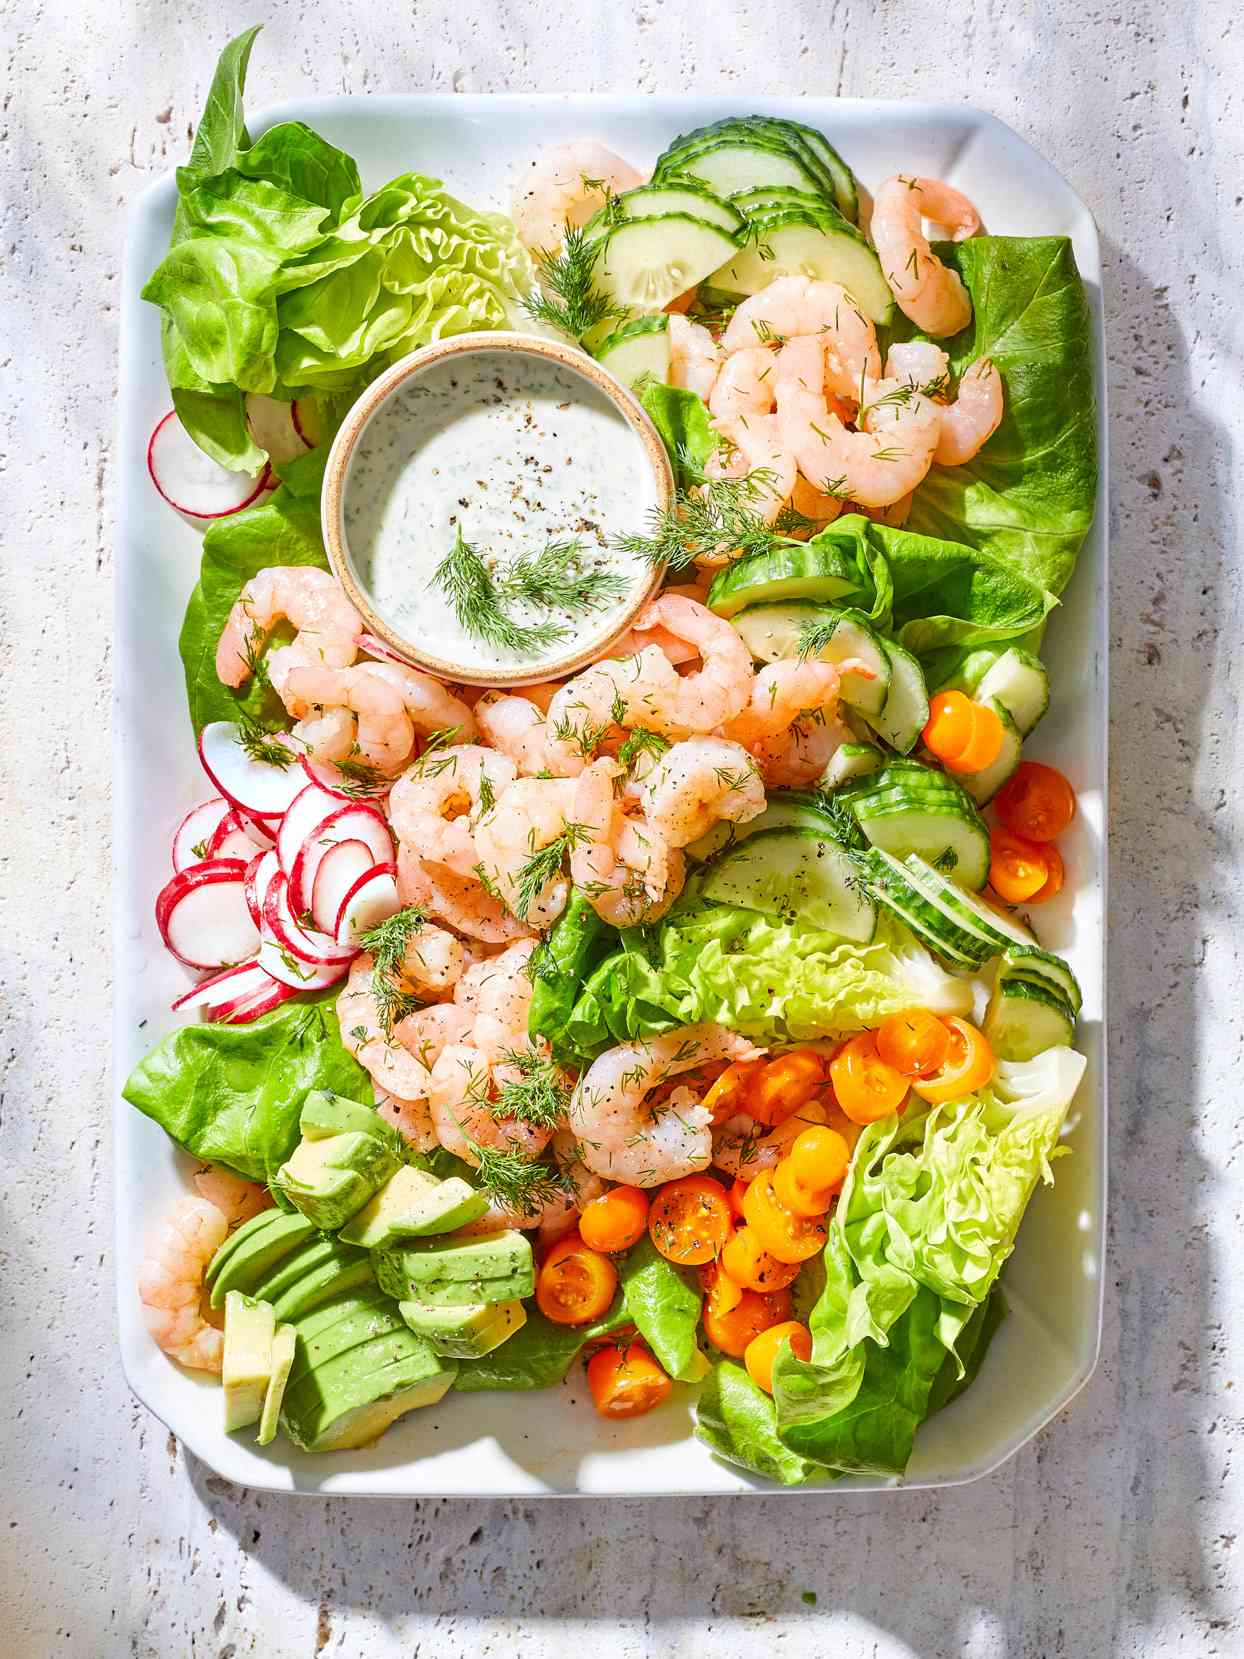 Marinated Shrimp Salad with Creamy Dill Dressing